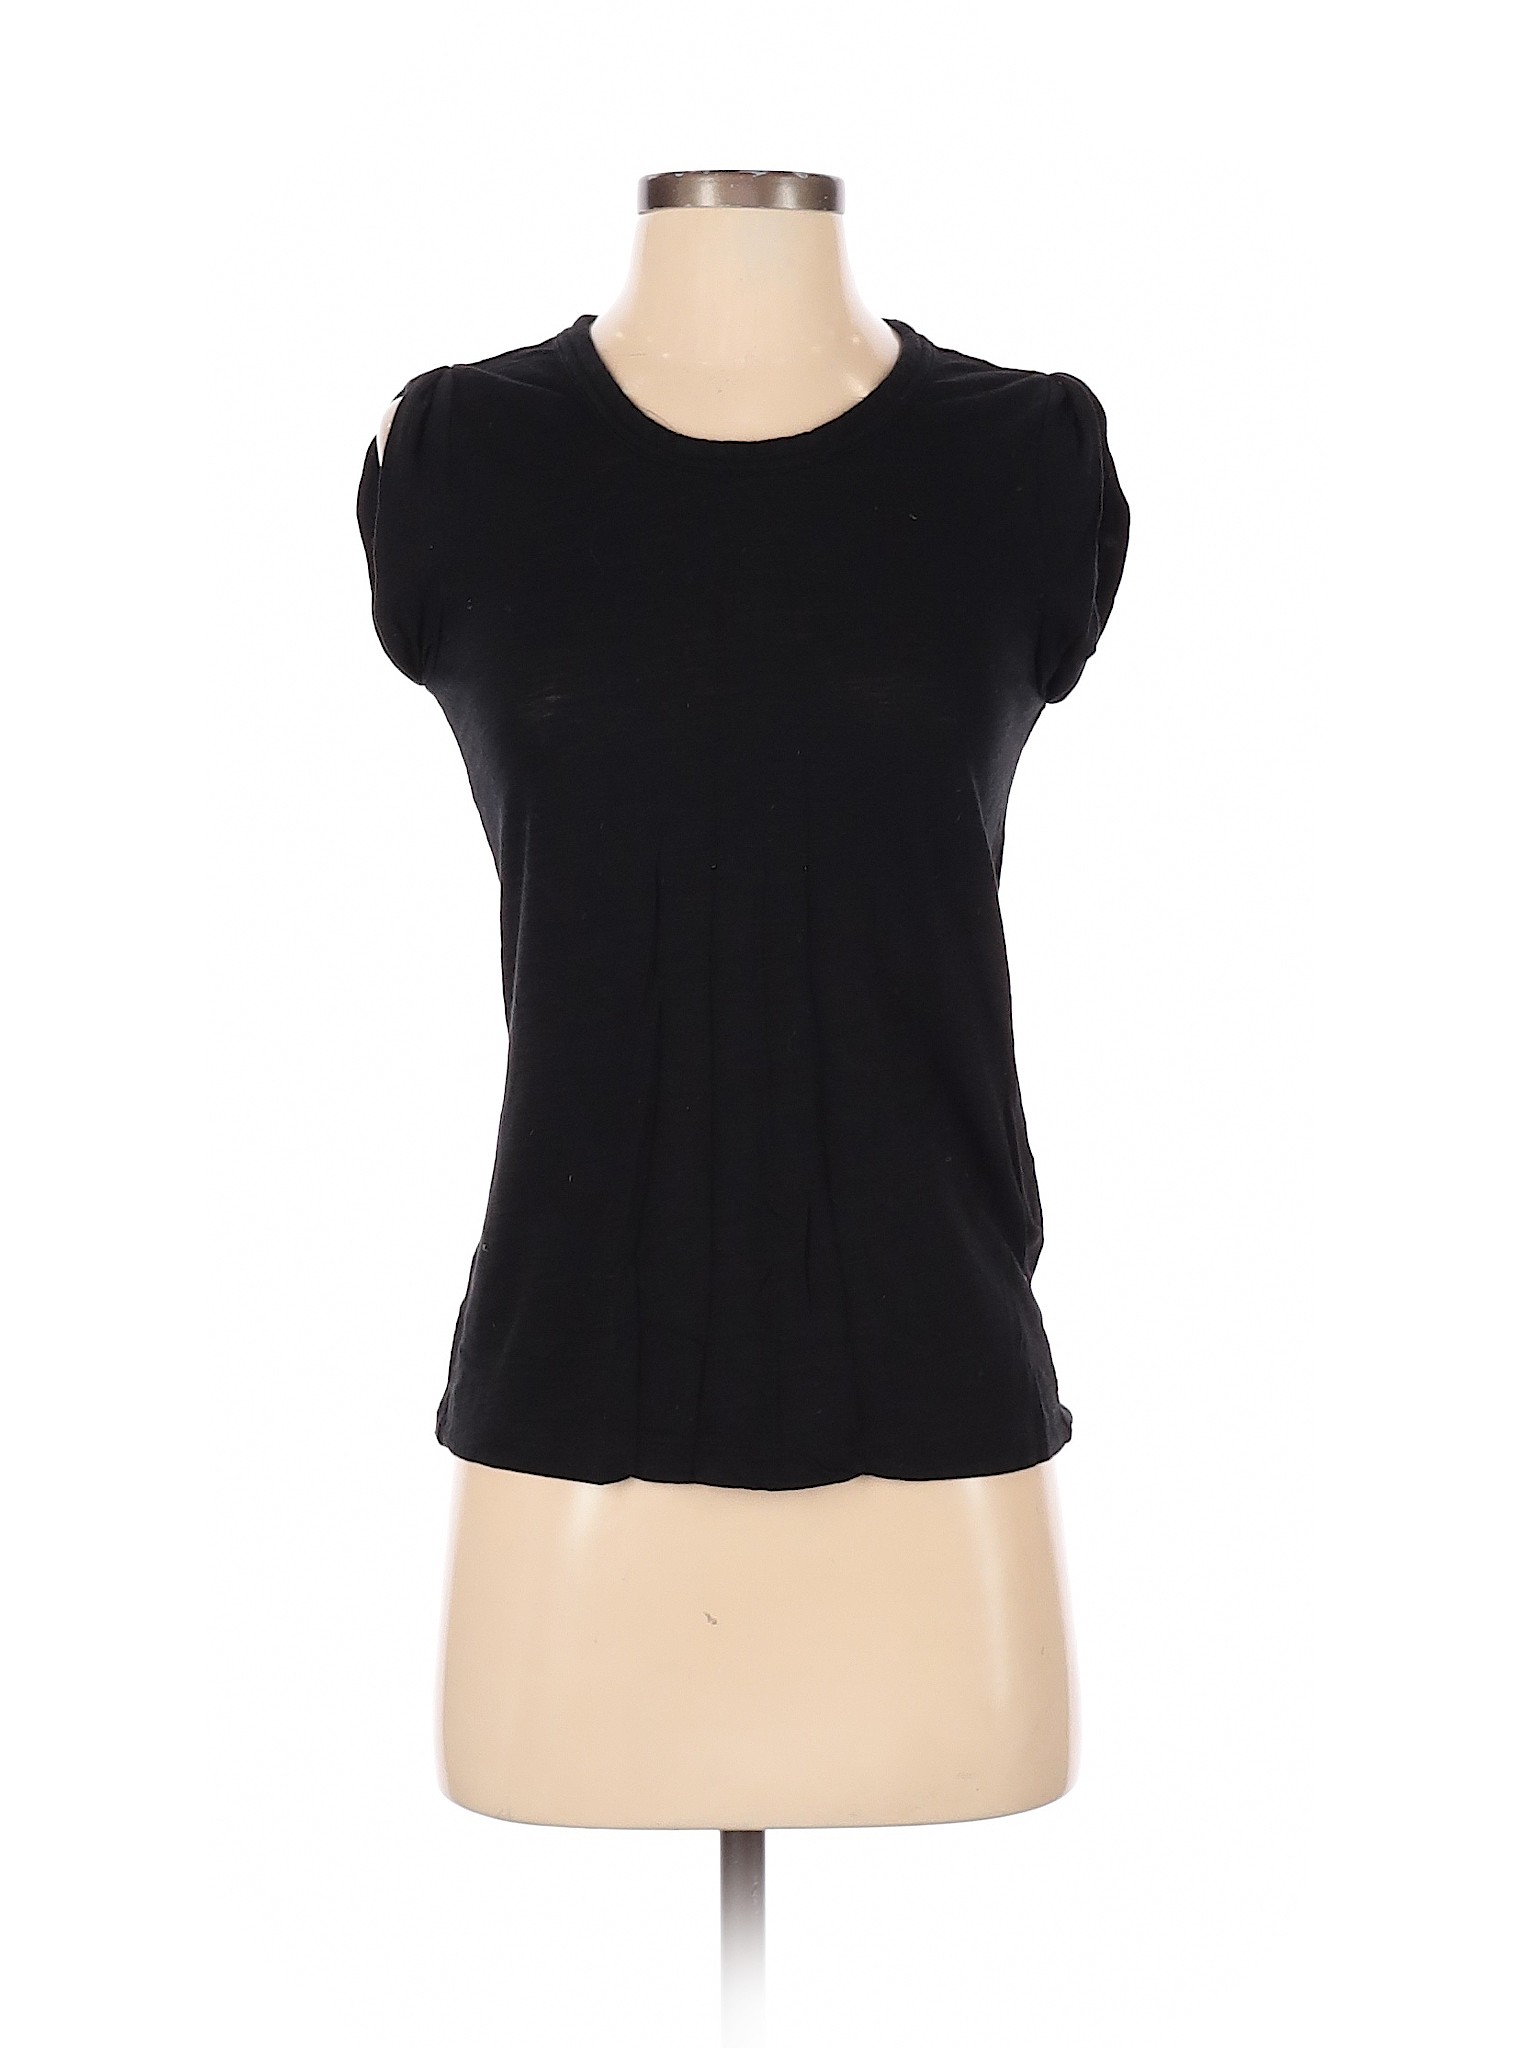 Banana Republic Factory Store Women Black Sleeveless T-Shirt XS | eBay